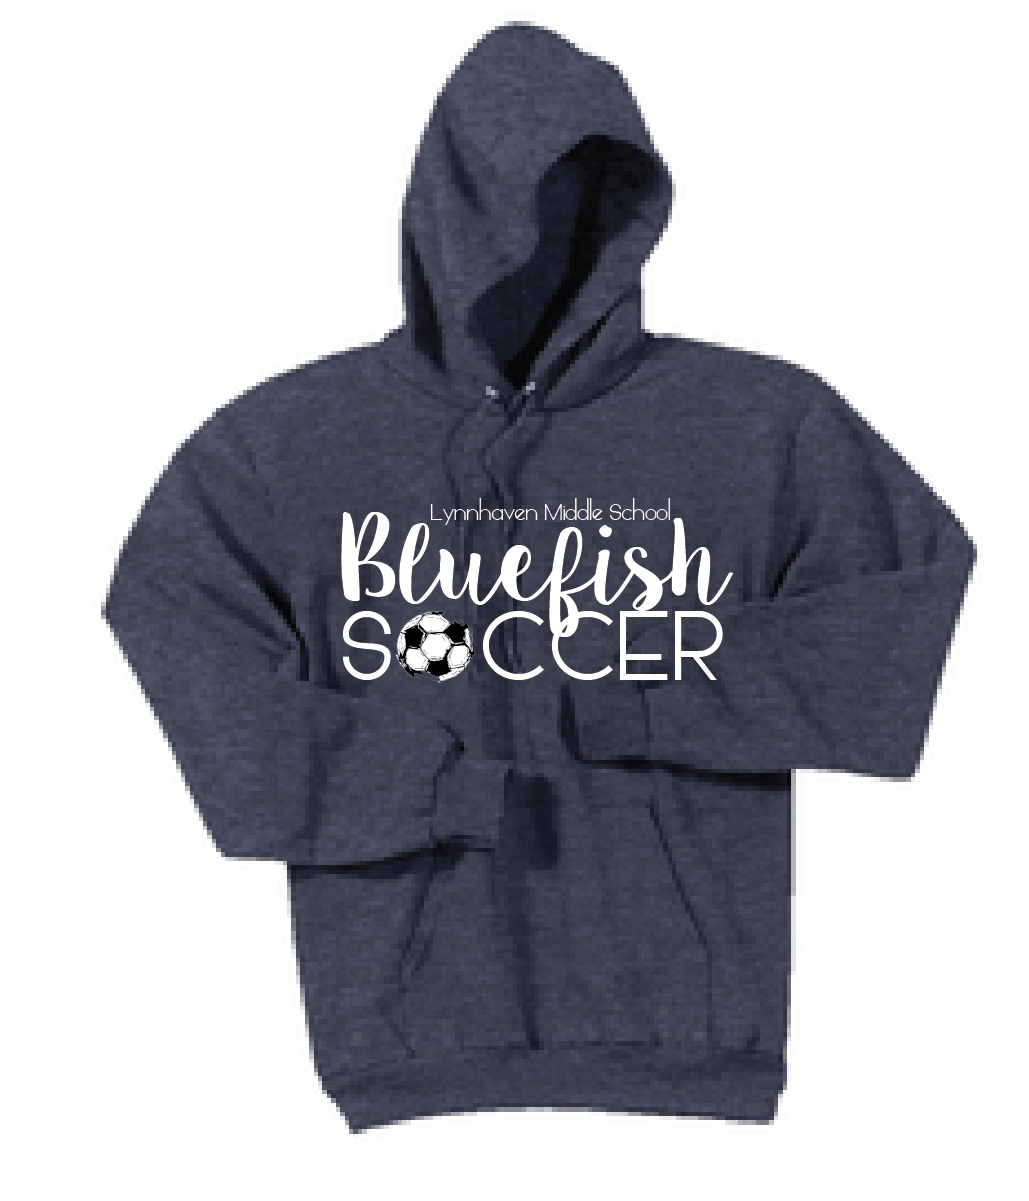 Bluefish Soccer Fleece Sweatshirt / Navy / LMS Girls Soccer - Fidgety